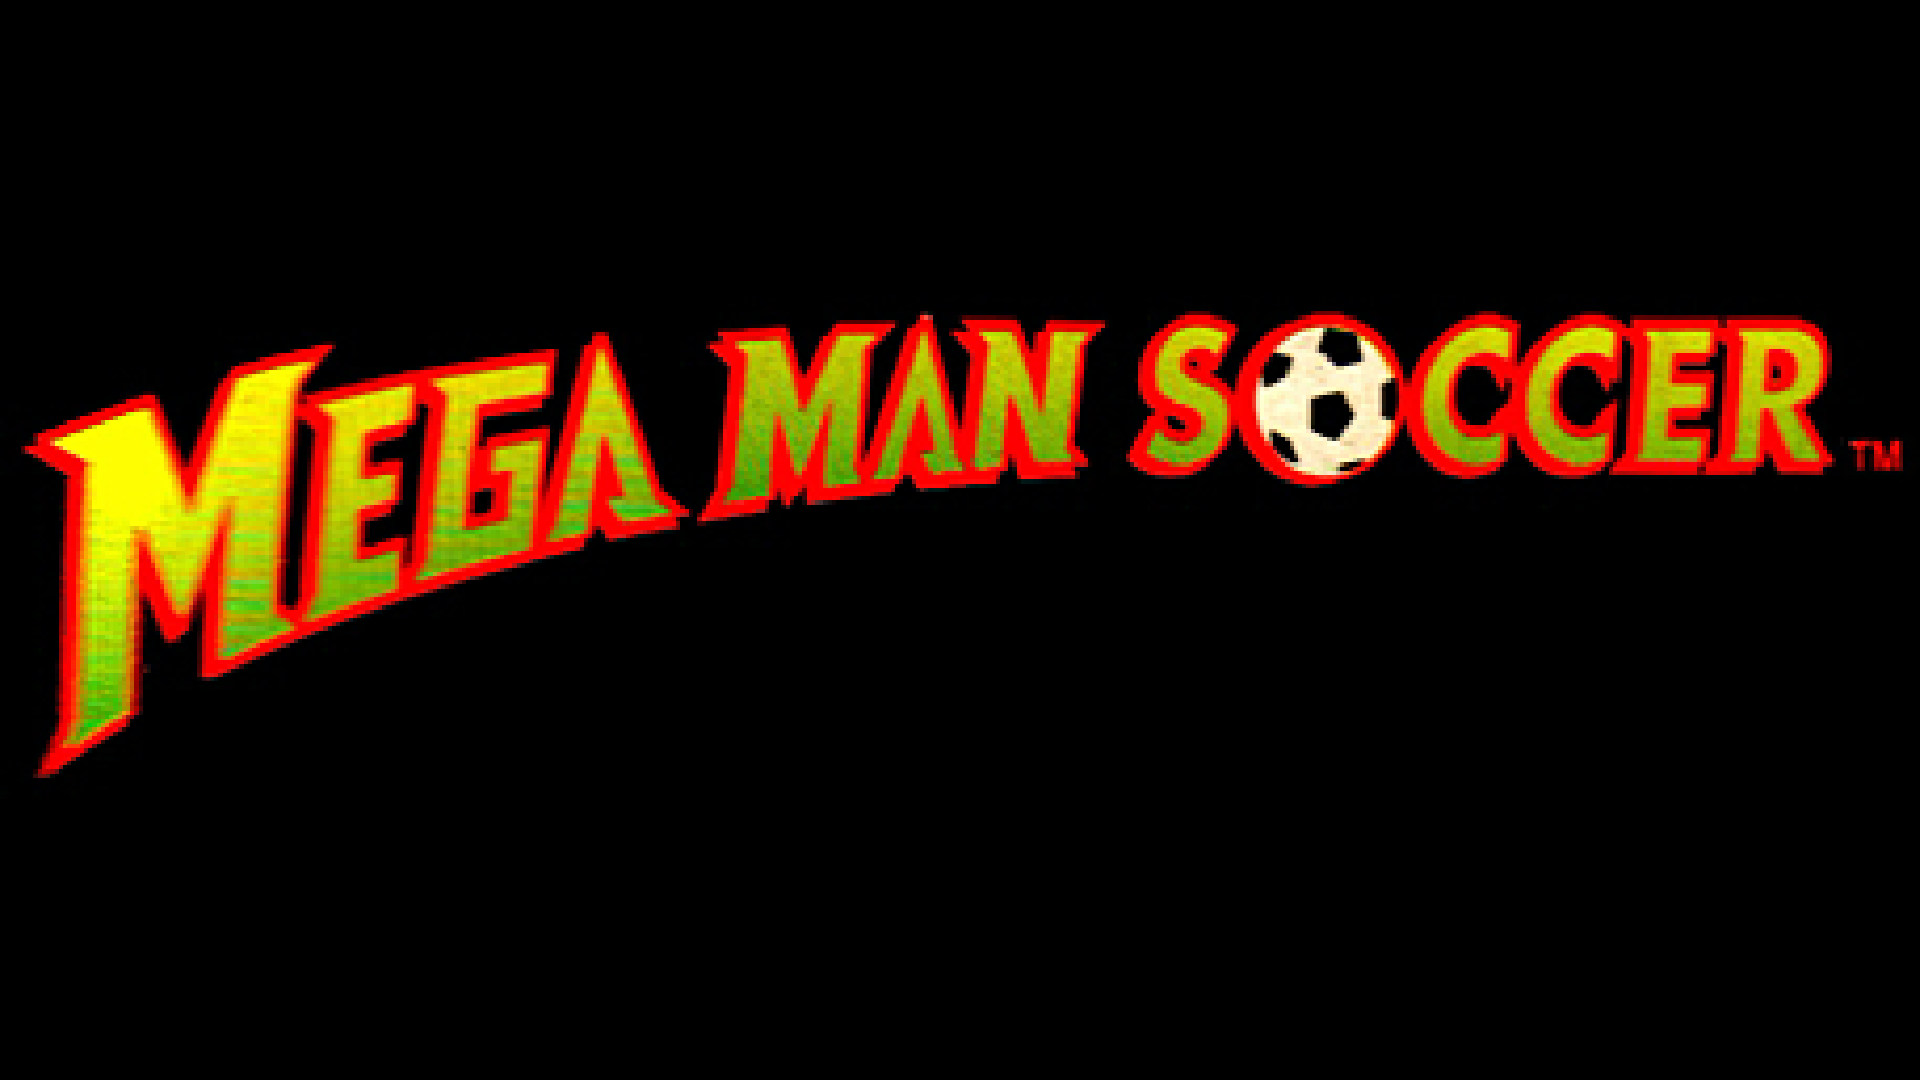 Mega Man's Soccer Logo